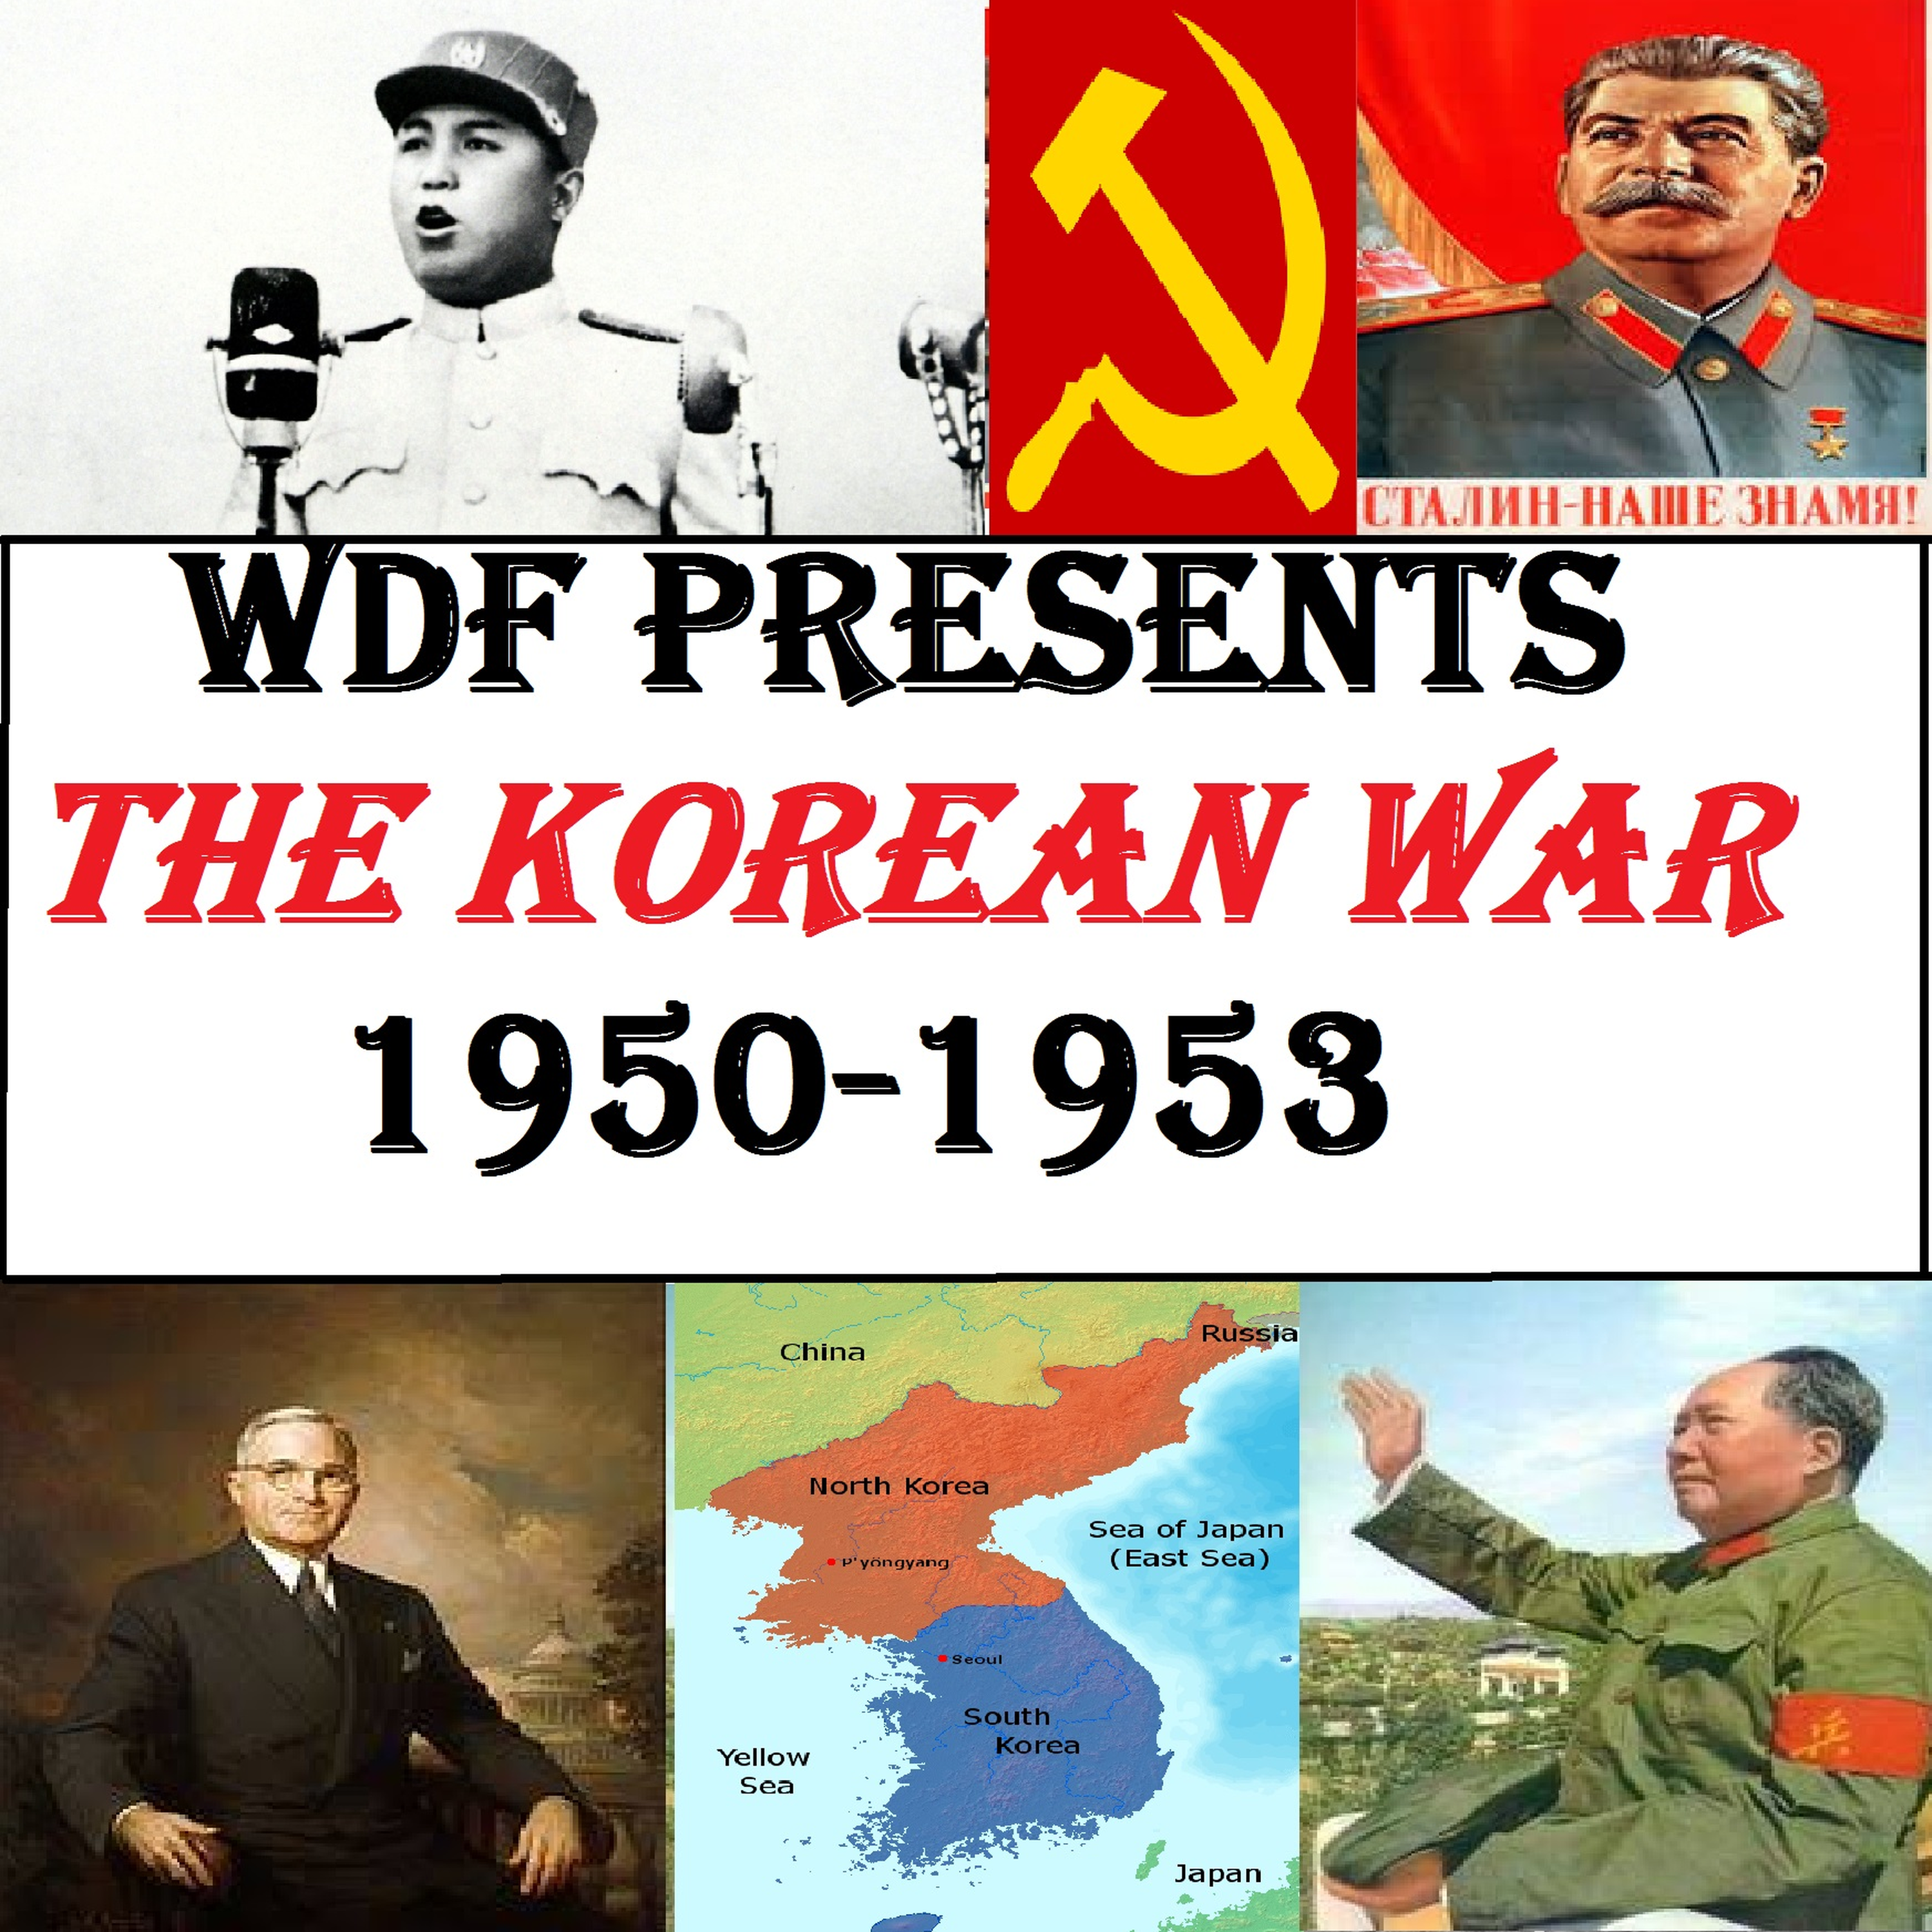 Korean War #38: The Perfect Scapegoat